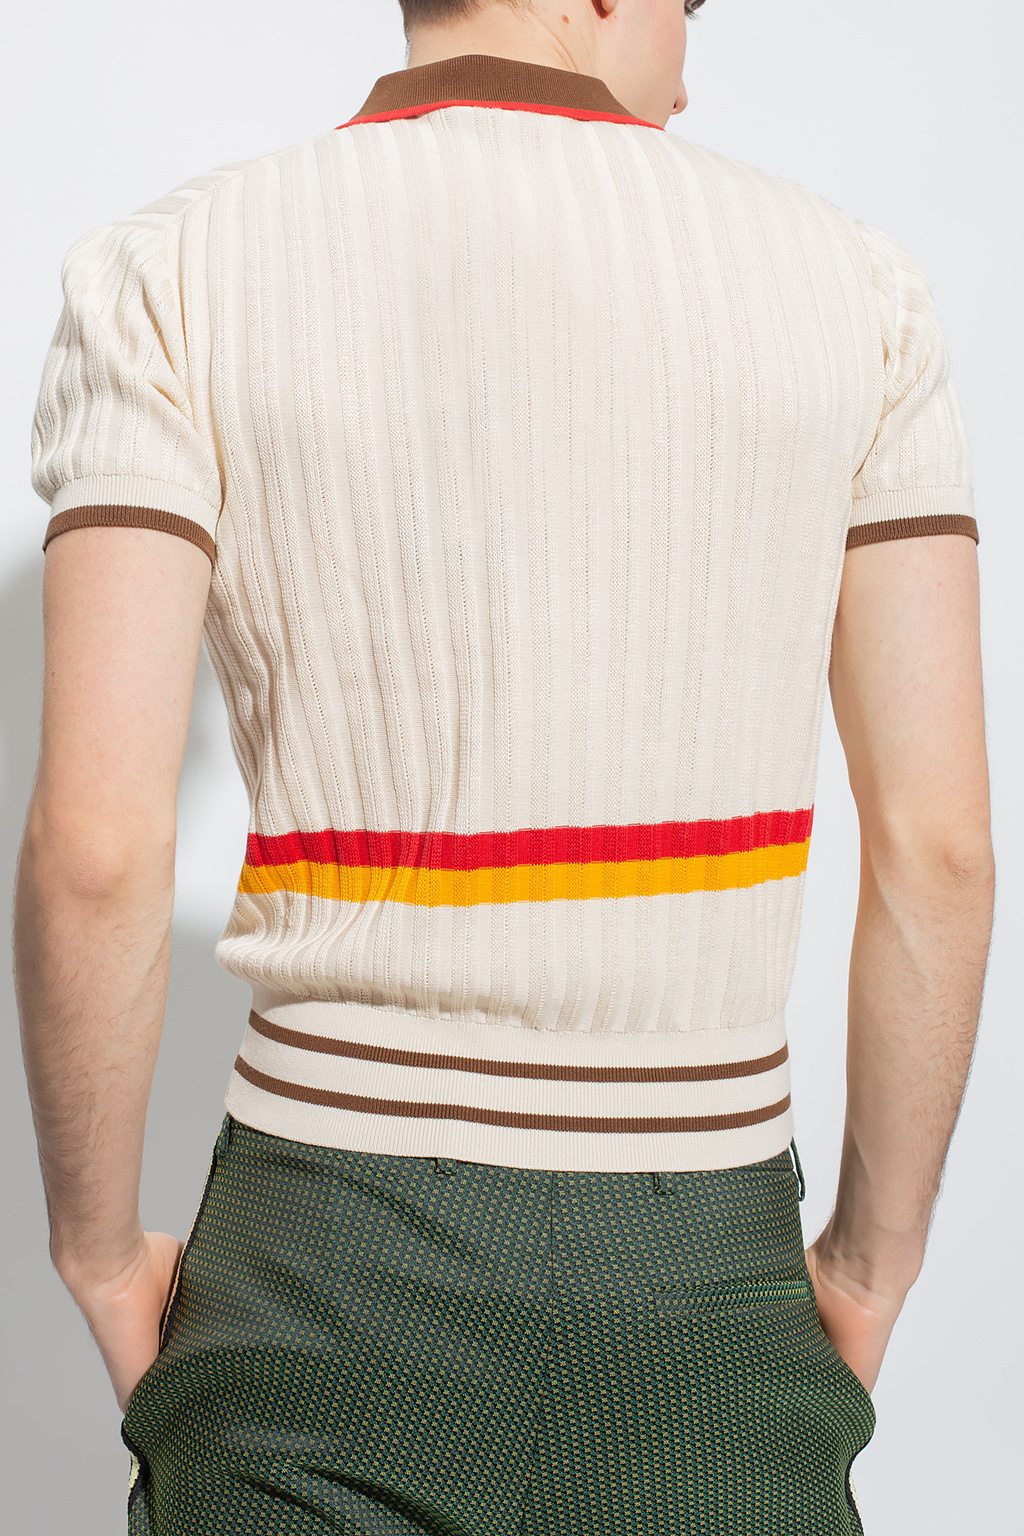 Wales Bonner 'Sun' polo shirt | Men's Clothing | Vitkac